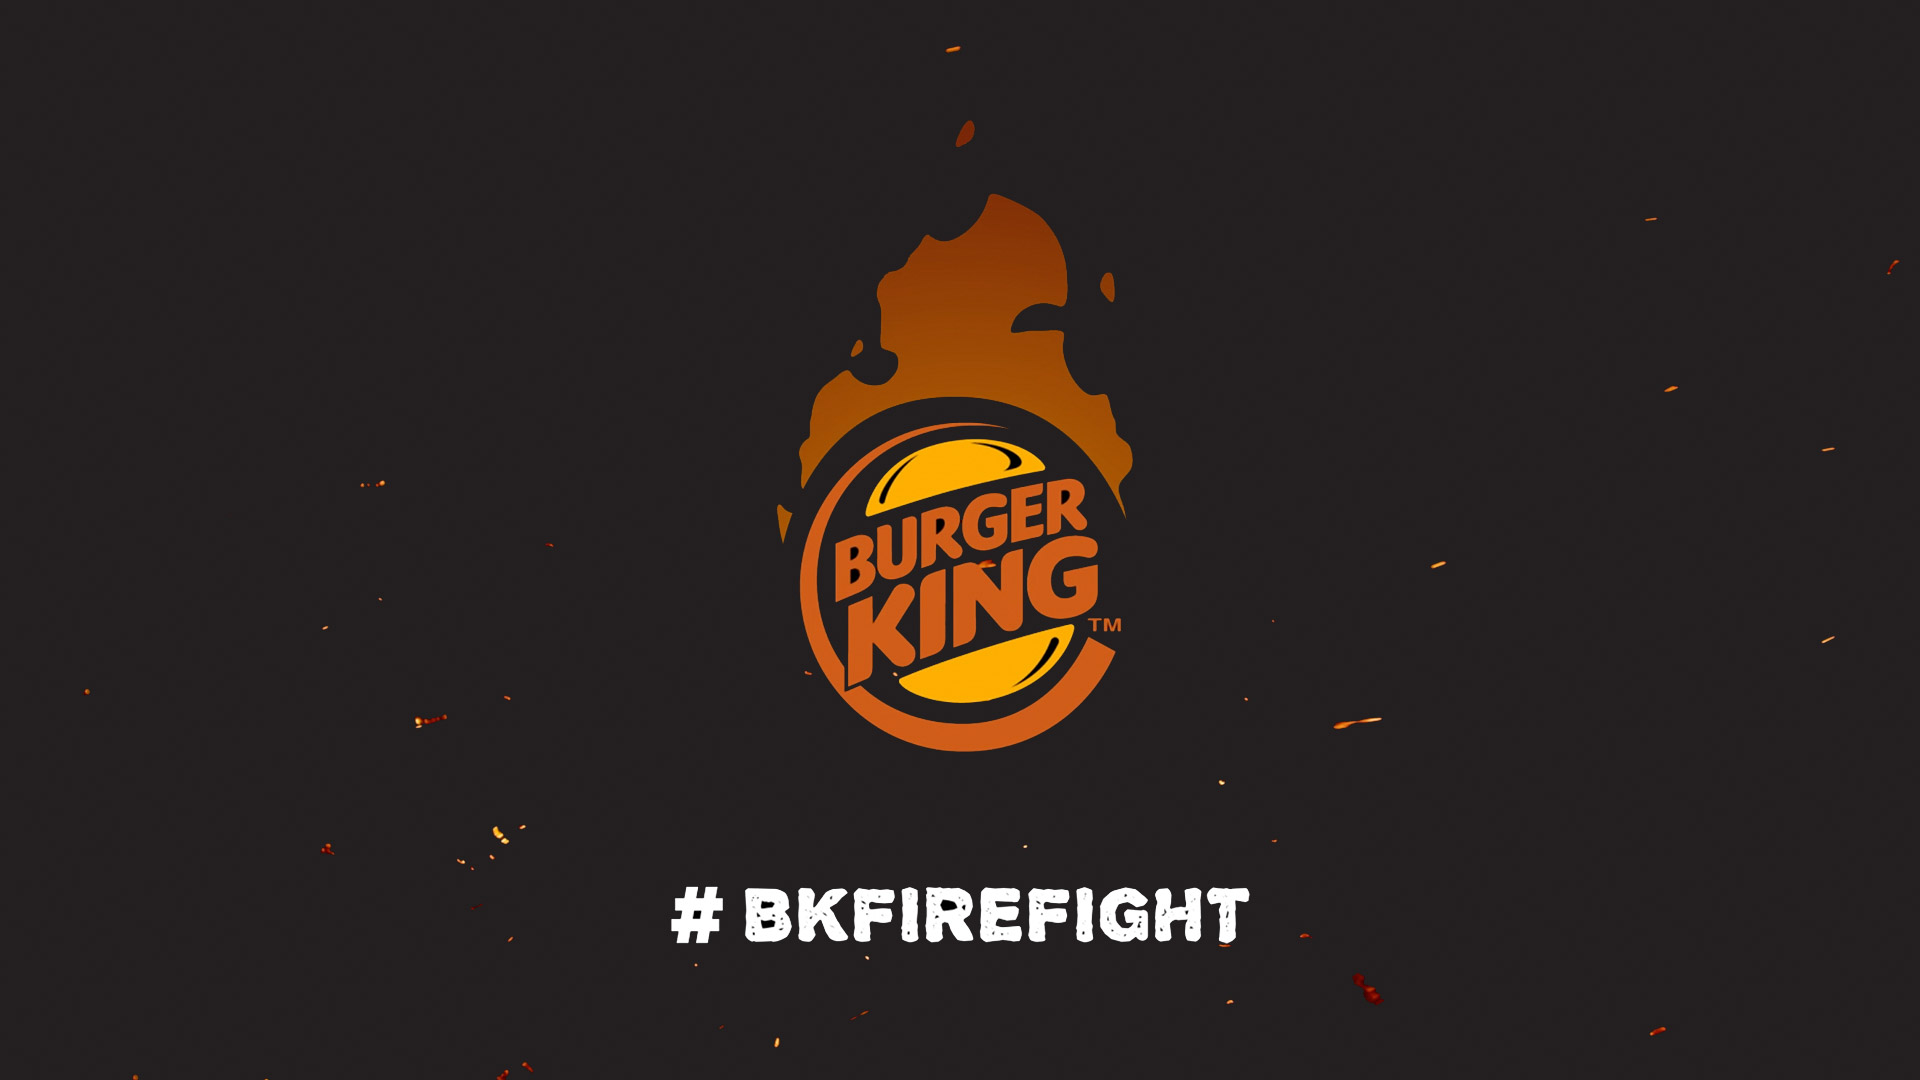 BK Firefight